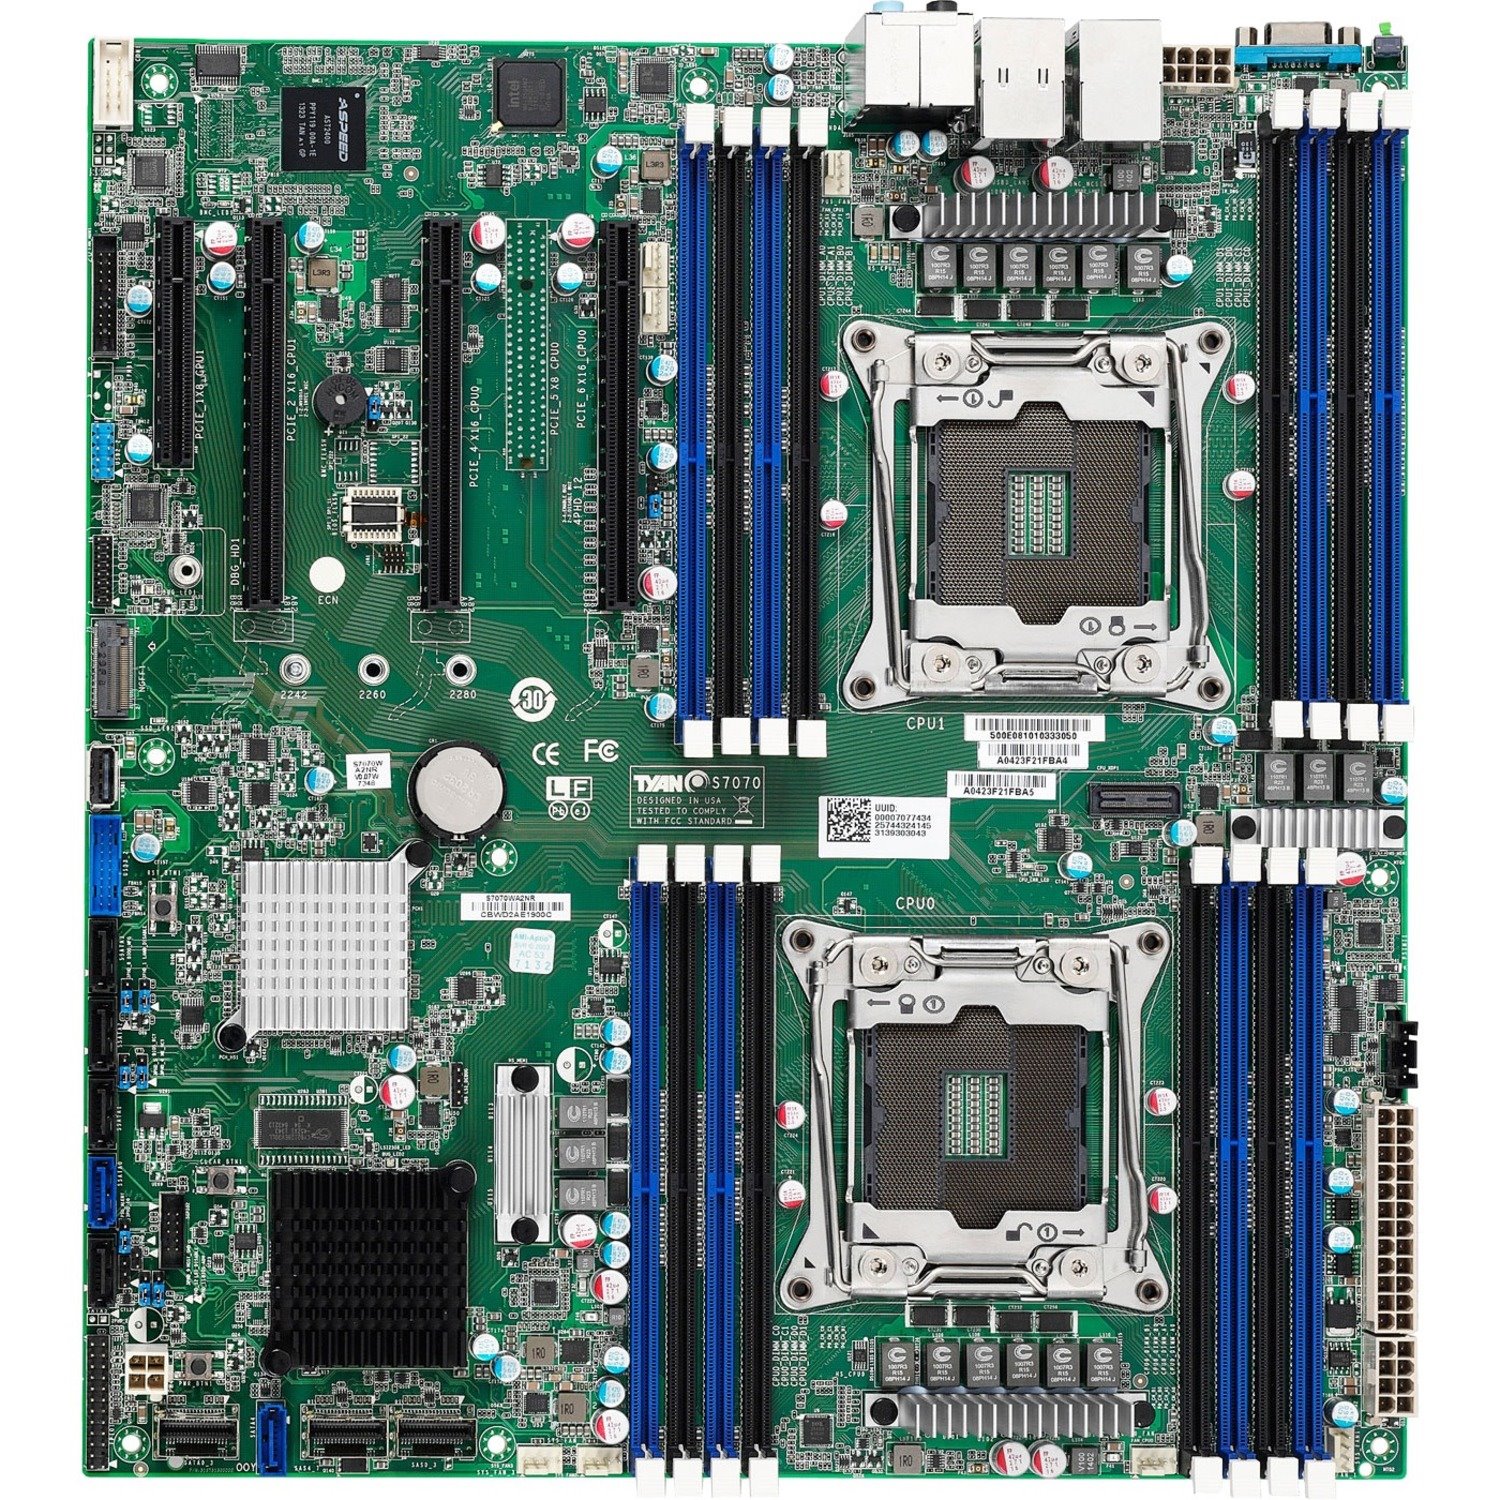 Tyan S7070 Server Motherboard - Intel C612 Chipset - Socket R LGA-2011 - SSI EEB